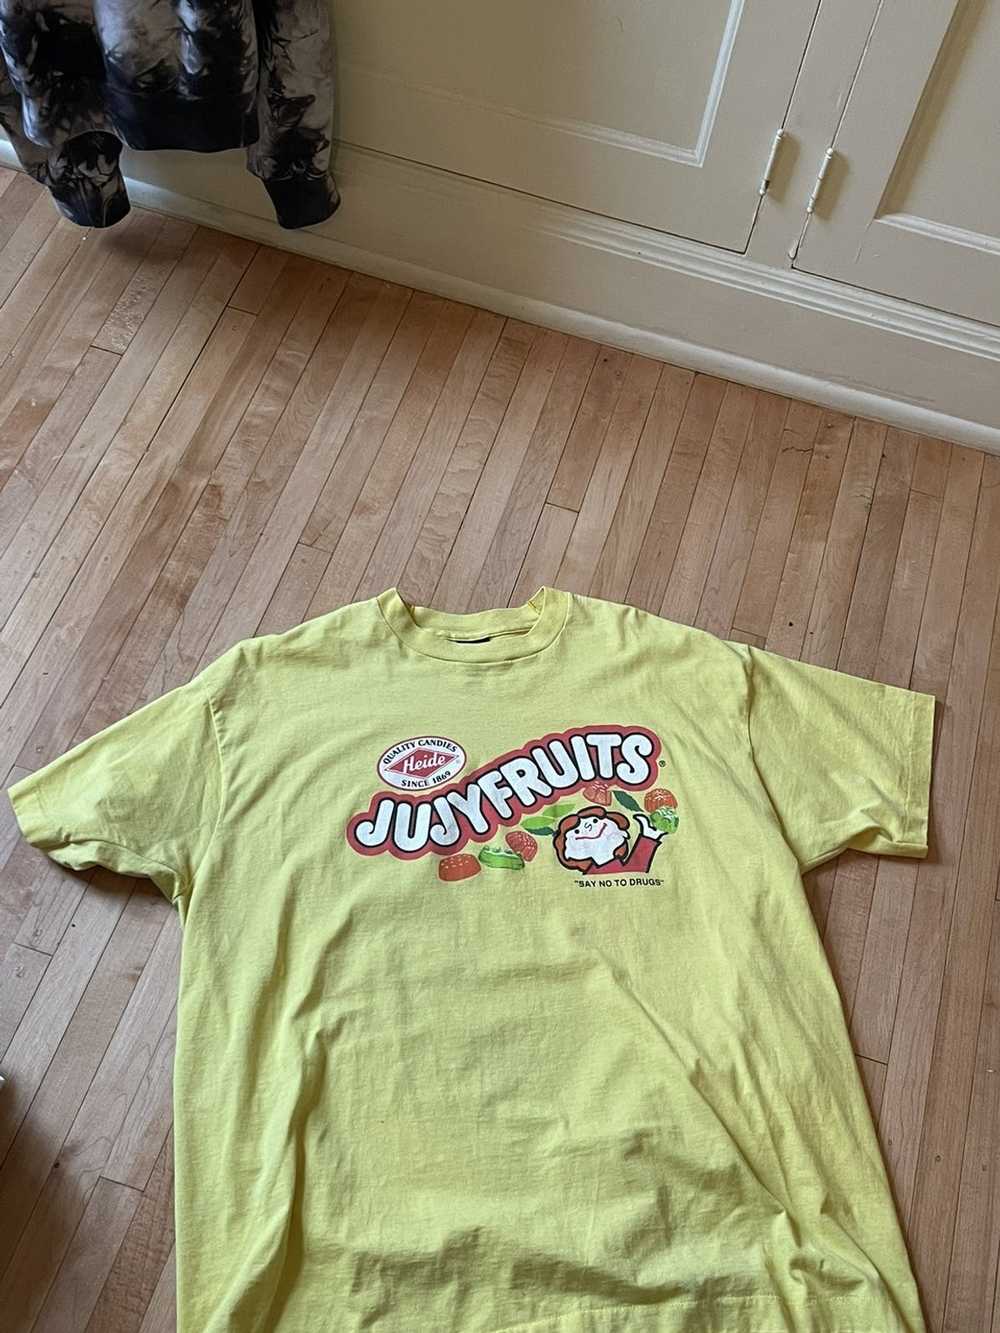 Vintage Jujy fruit t-shirt - image 2